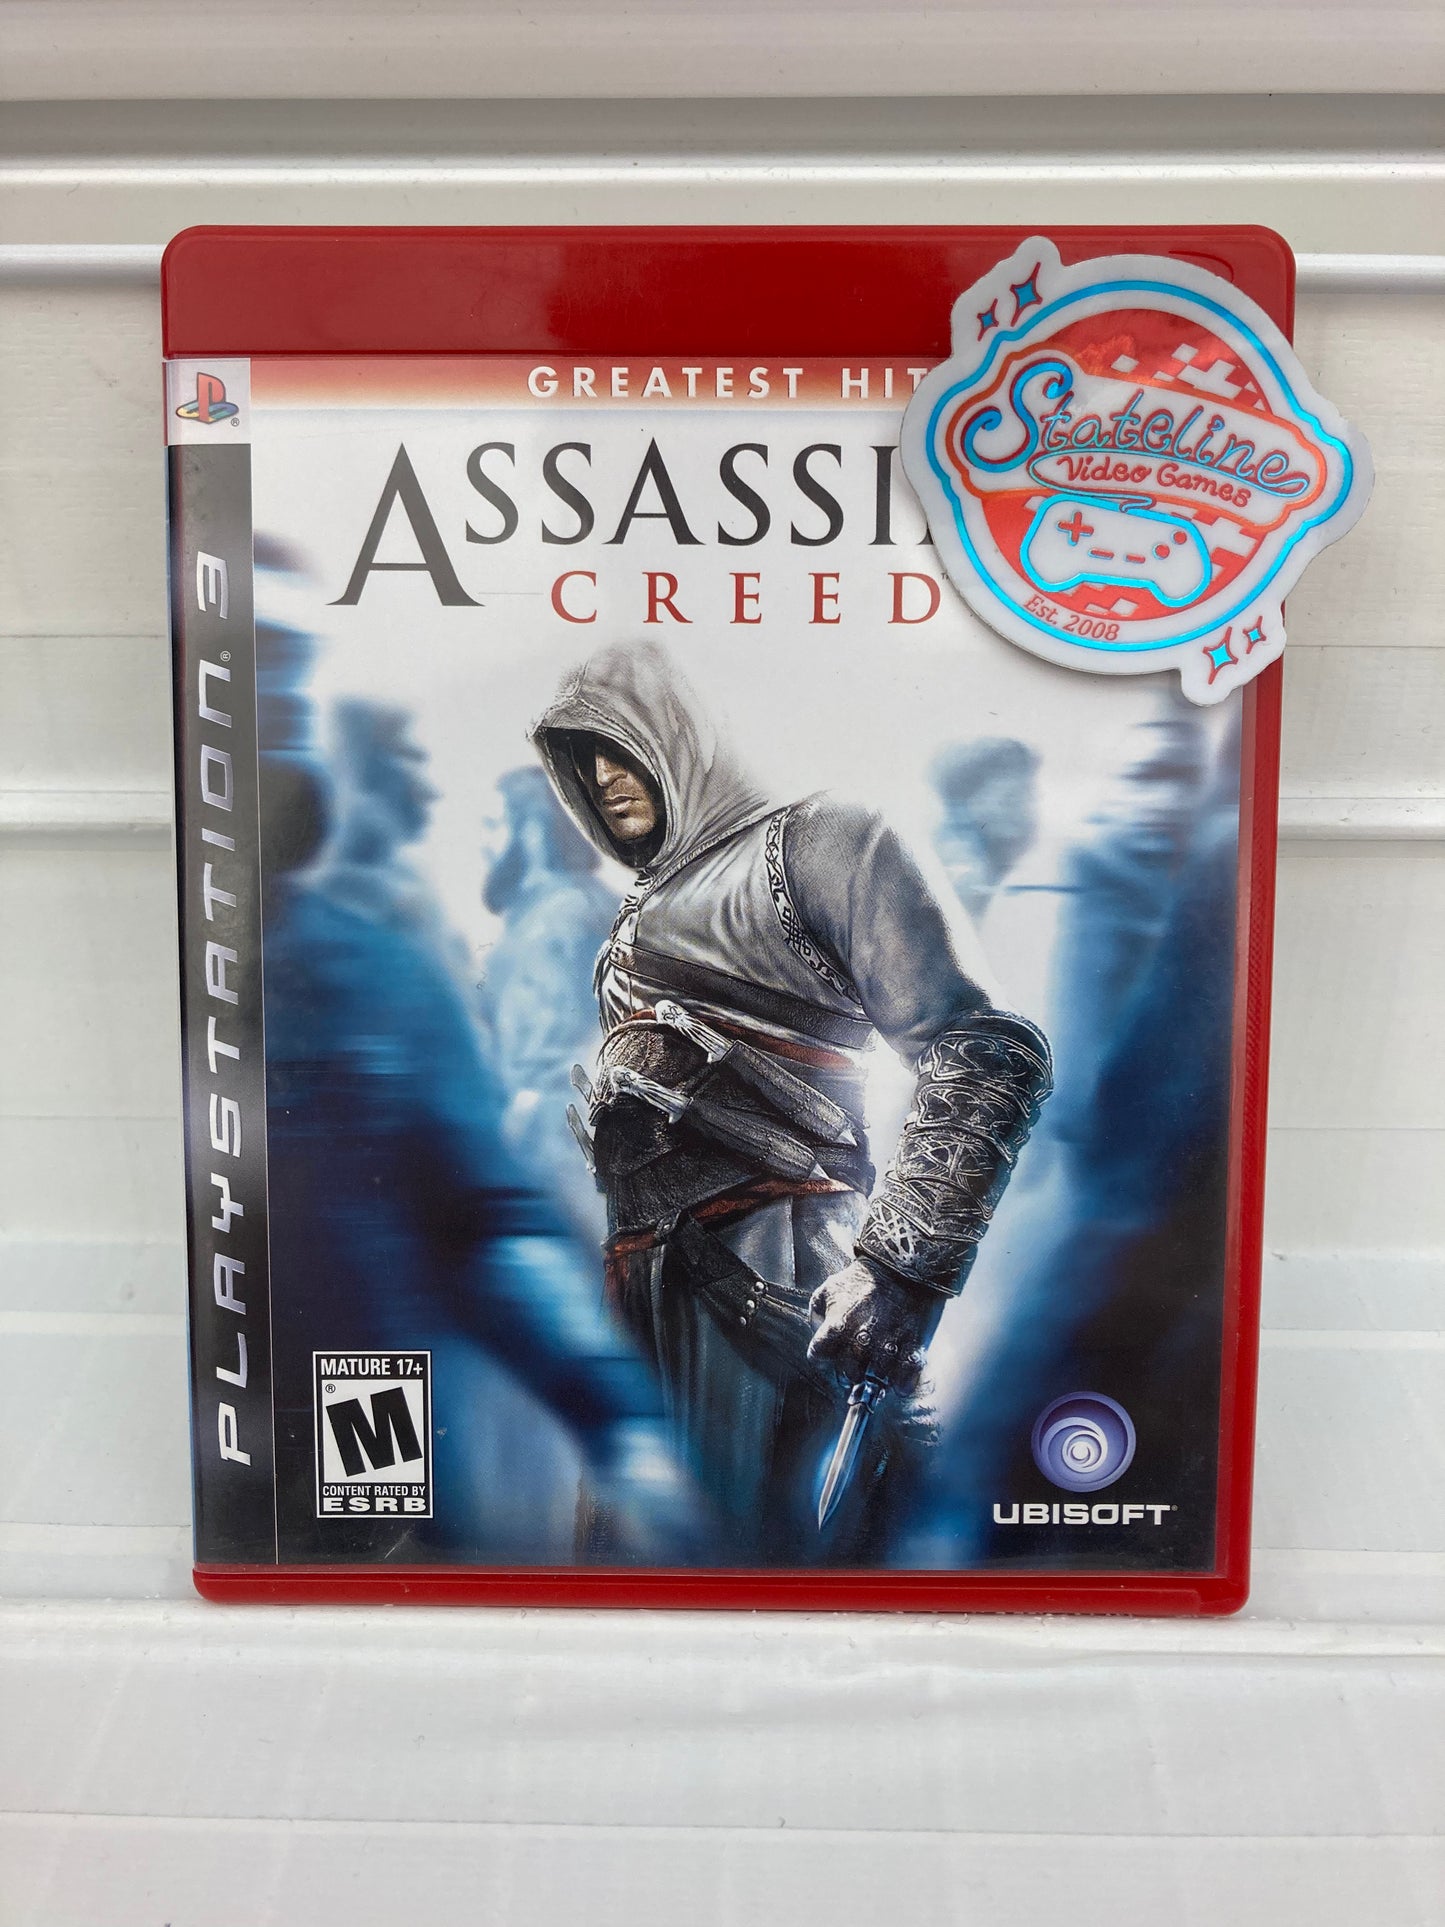 Assassin's Creed - Playstation 3